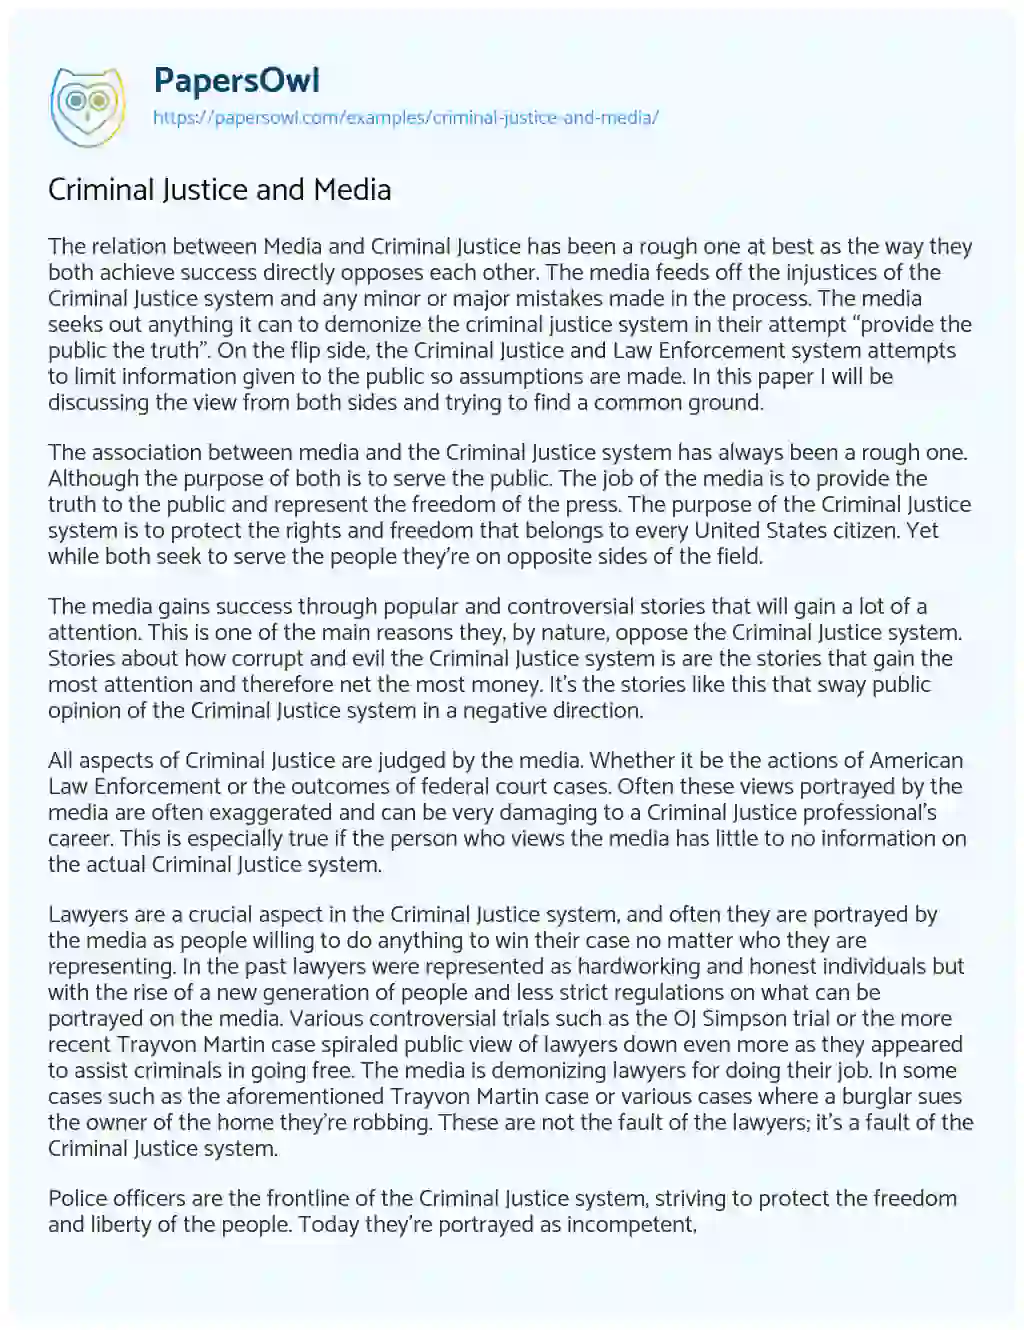 Criminal Justice and Media essay